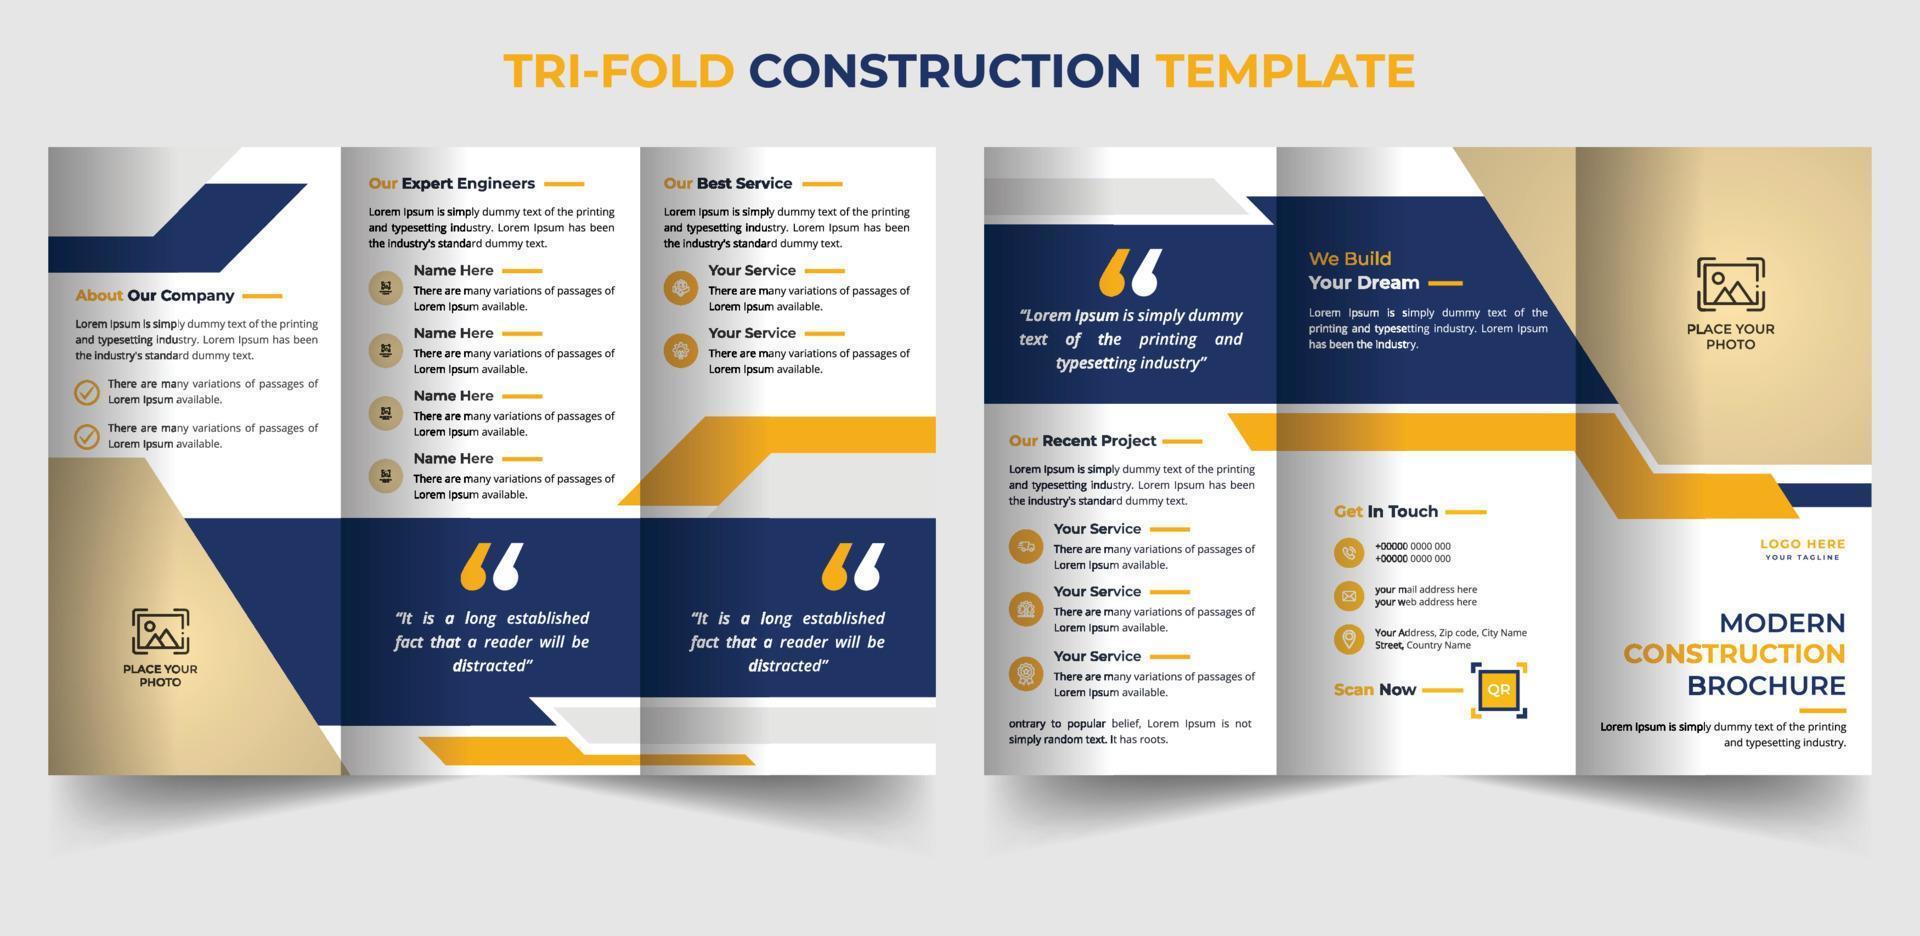 Modern trifold business construction brochure design template vector